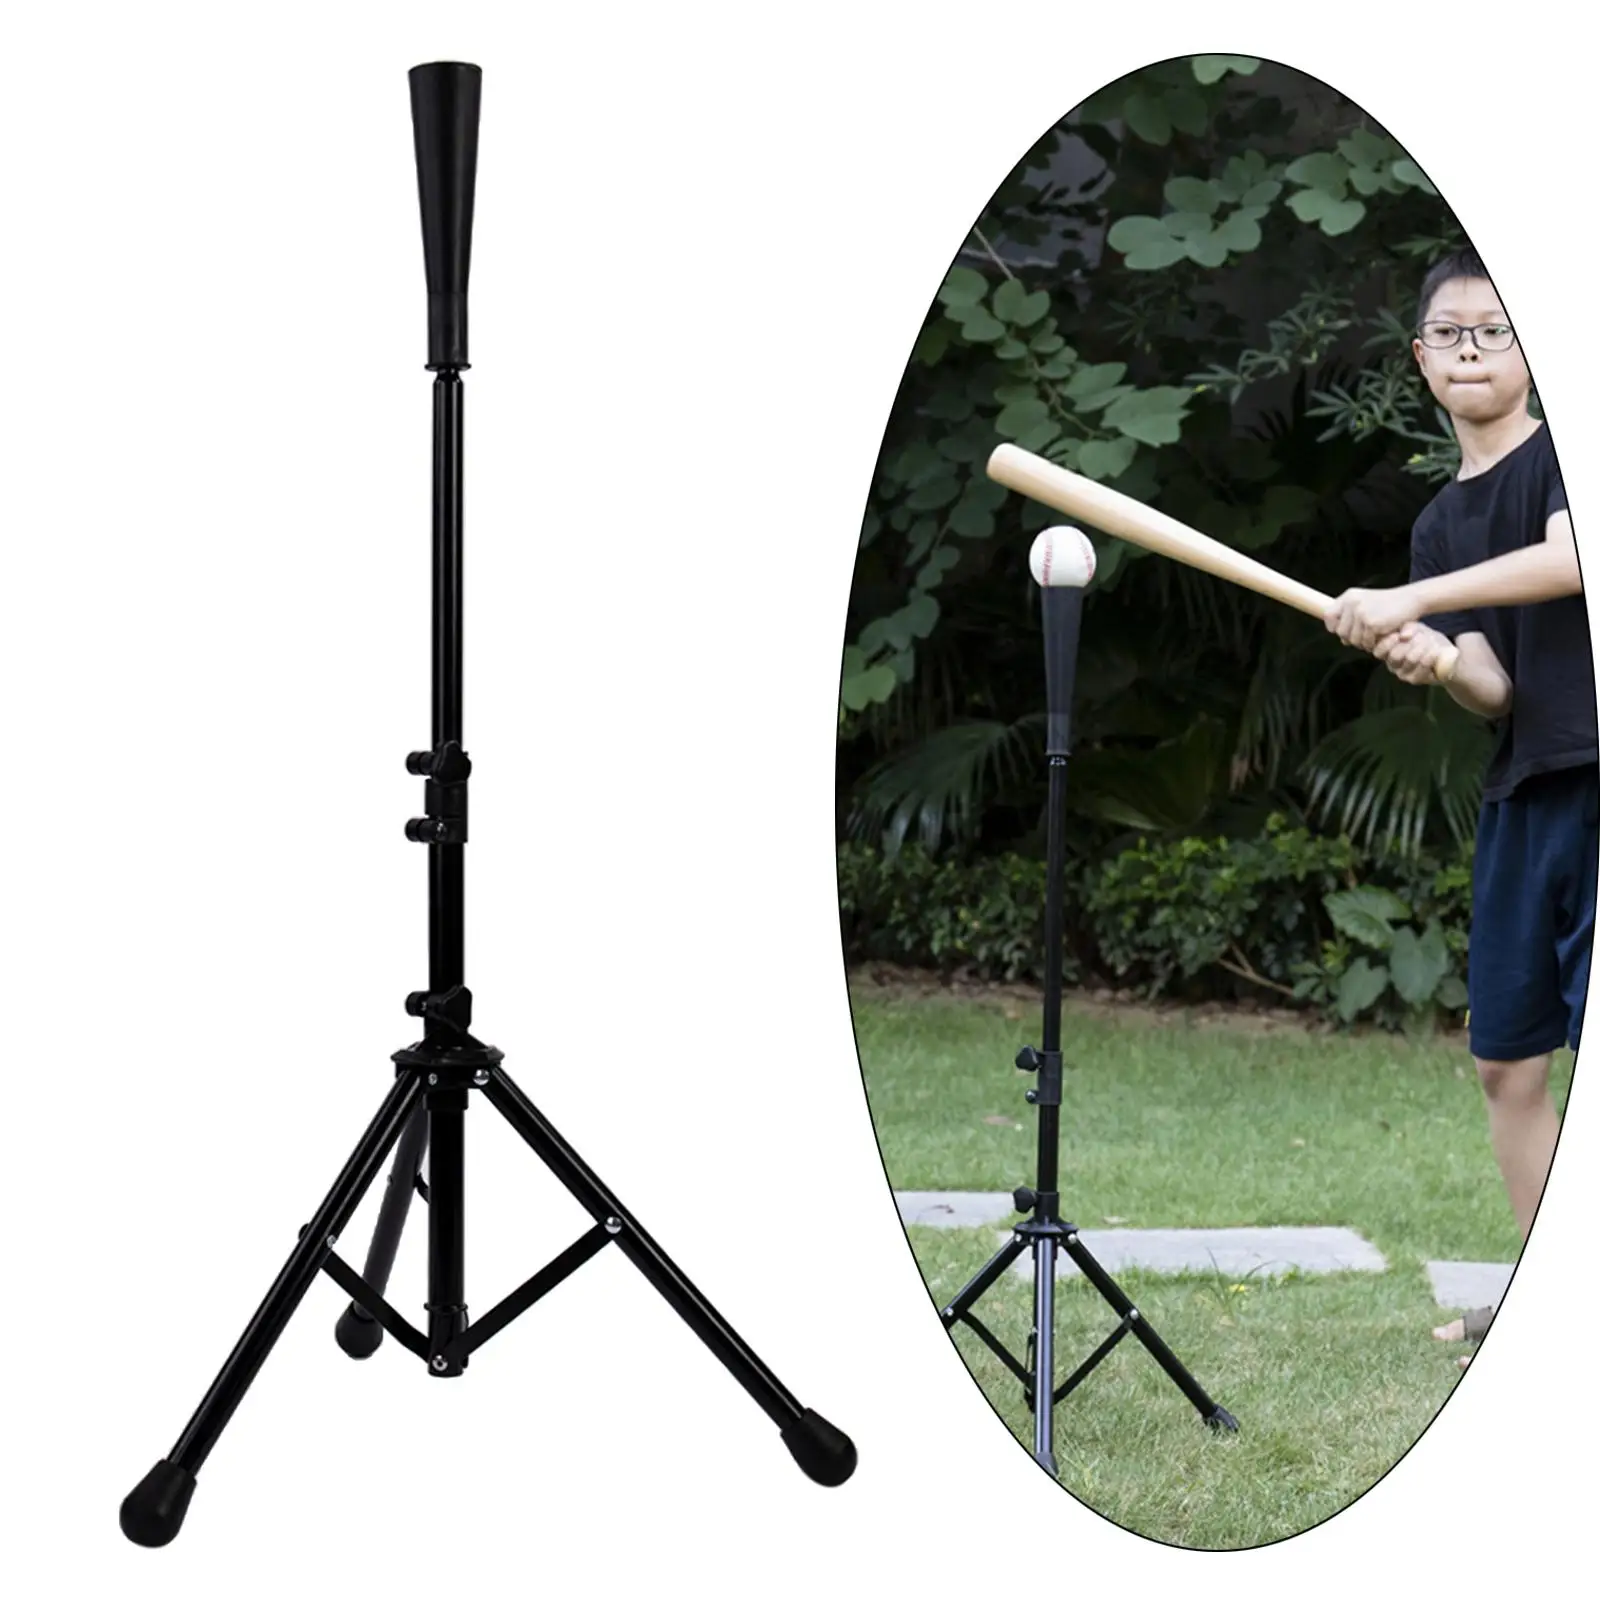 Outdoor Baseball Tee Batting Tripod T Stand Training Mount Adjustable Hitting Tee Softball Practice Ball Accessories Plastic